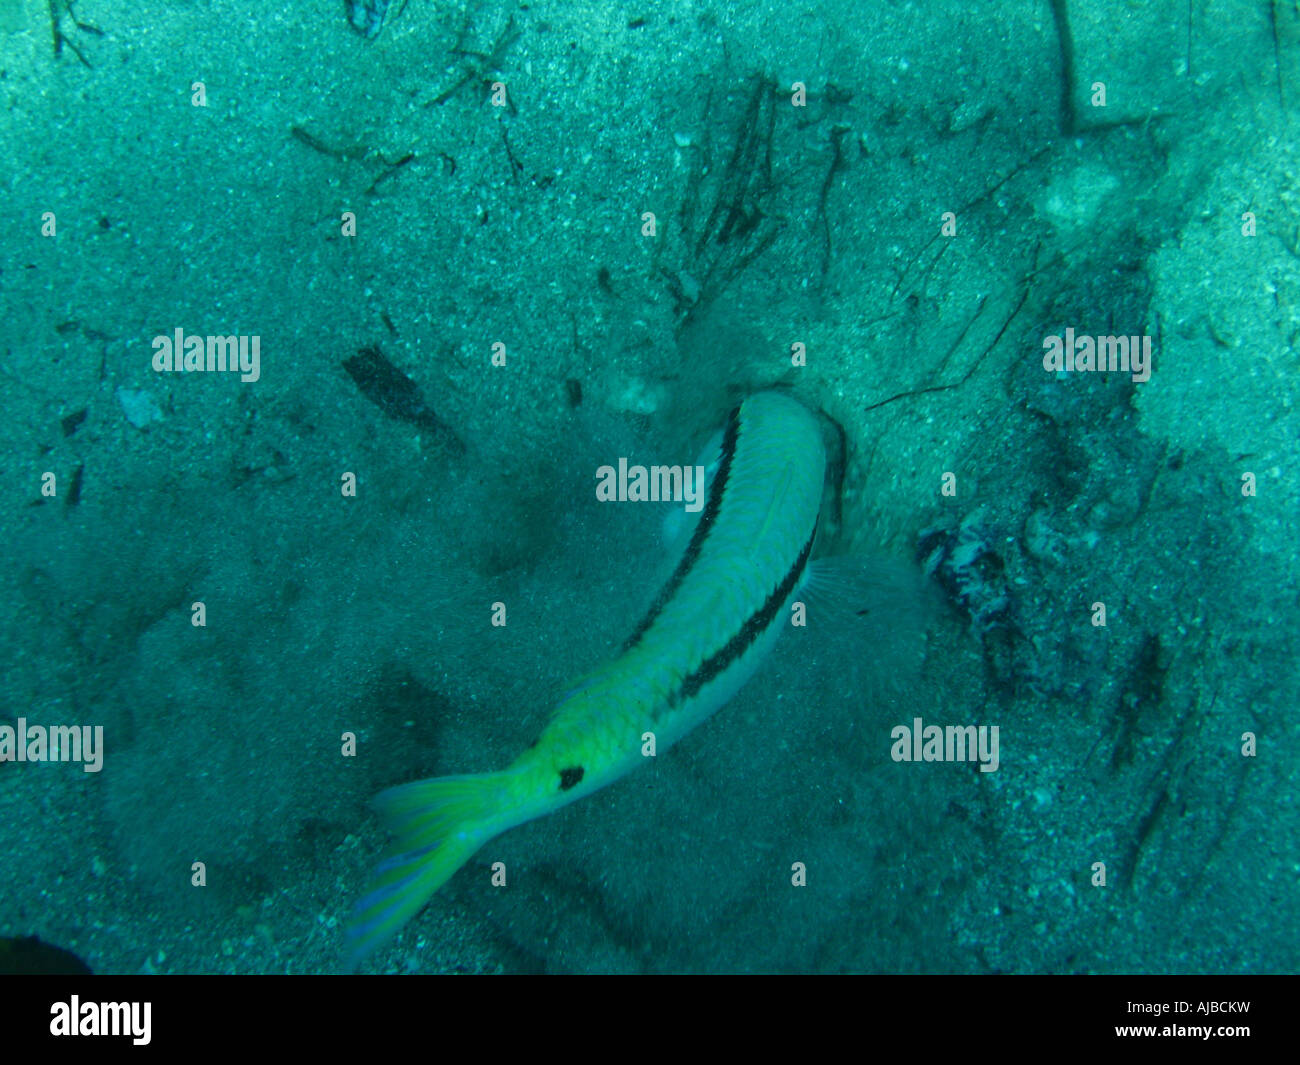 Pesce Capra Immagini e Fotos Stock - Alamy